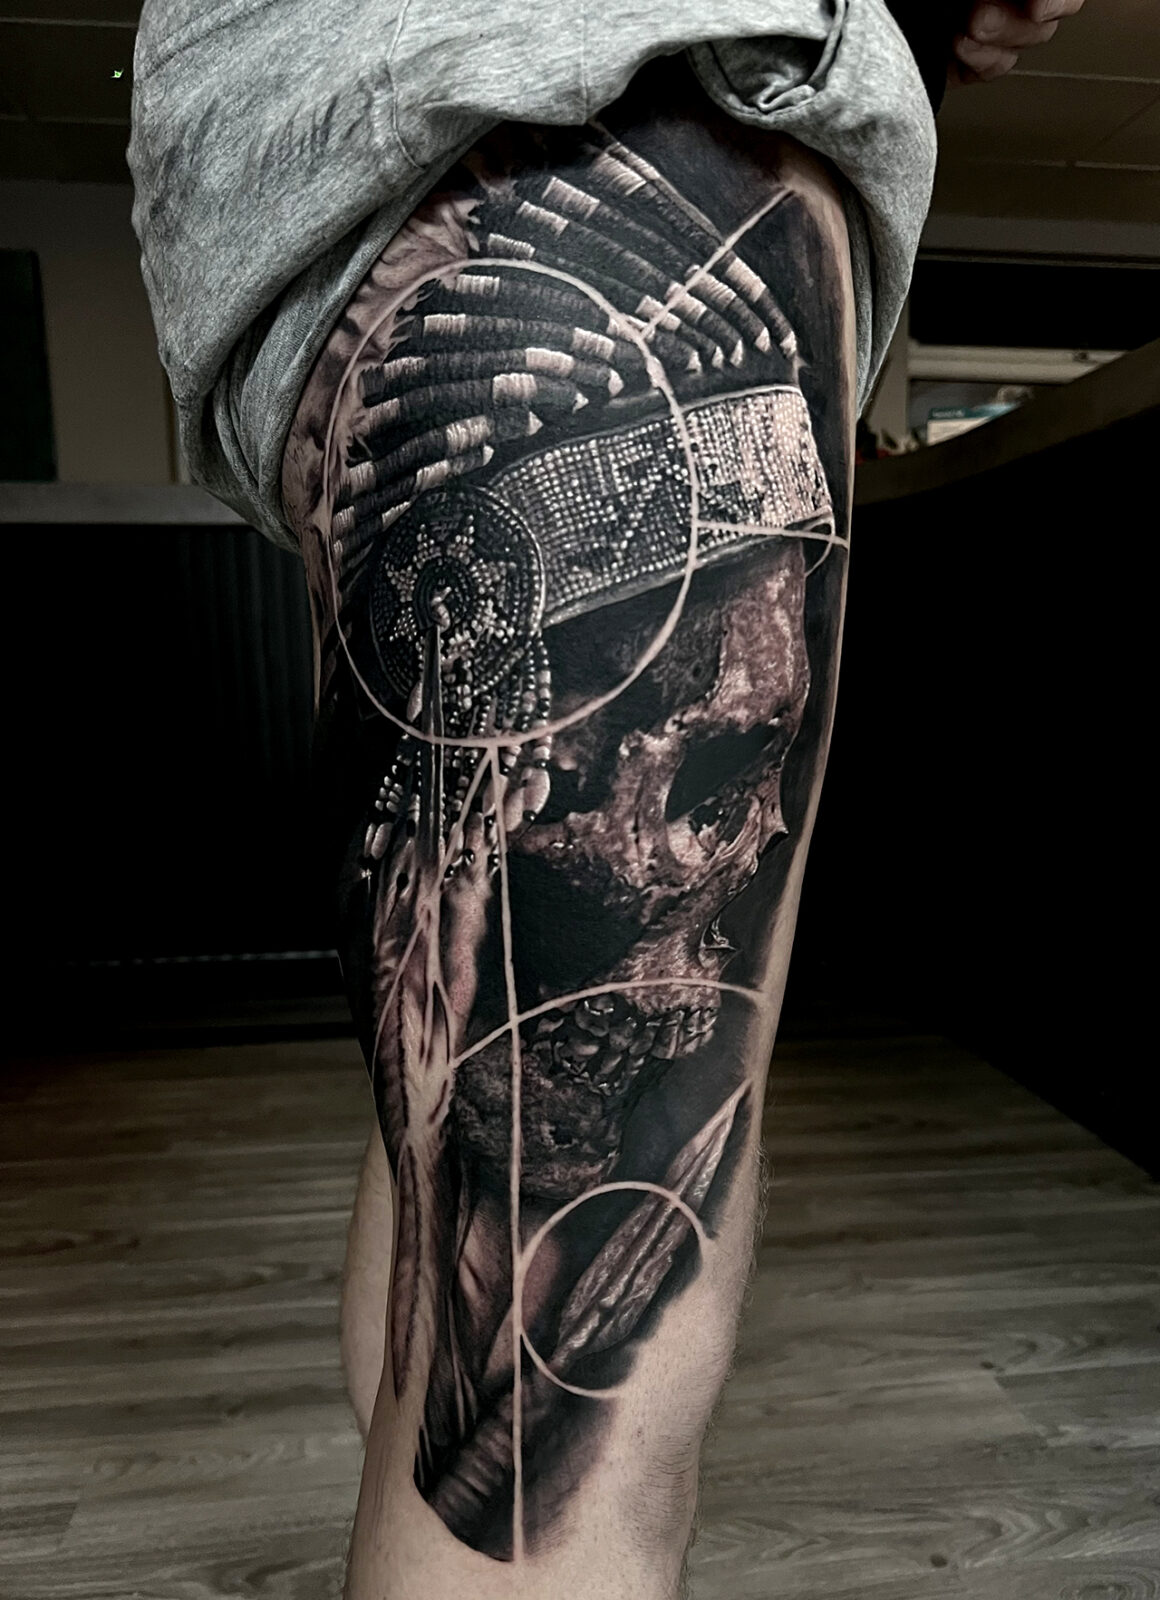 TOM STEPHENSON, Studio de tatouage du collectif Dark Horse